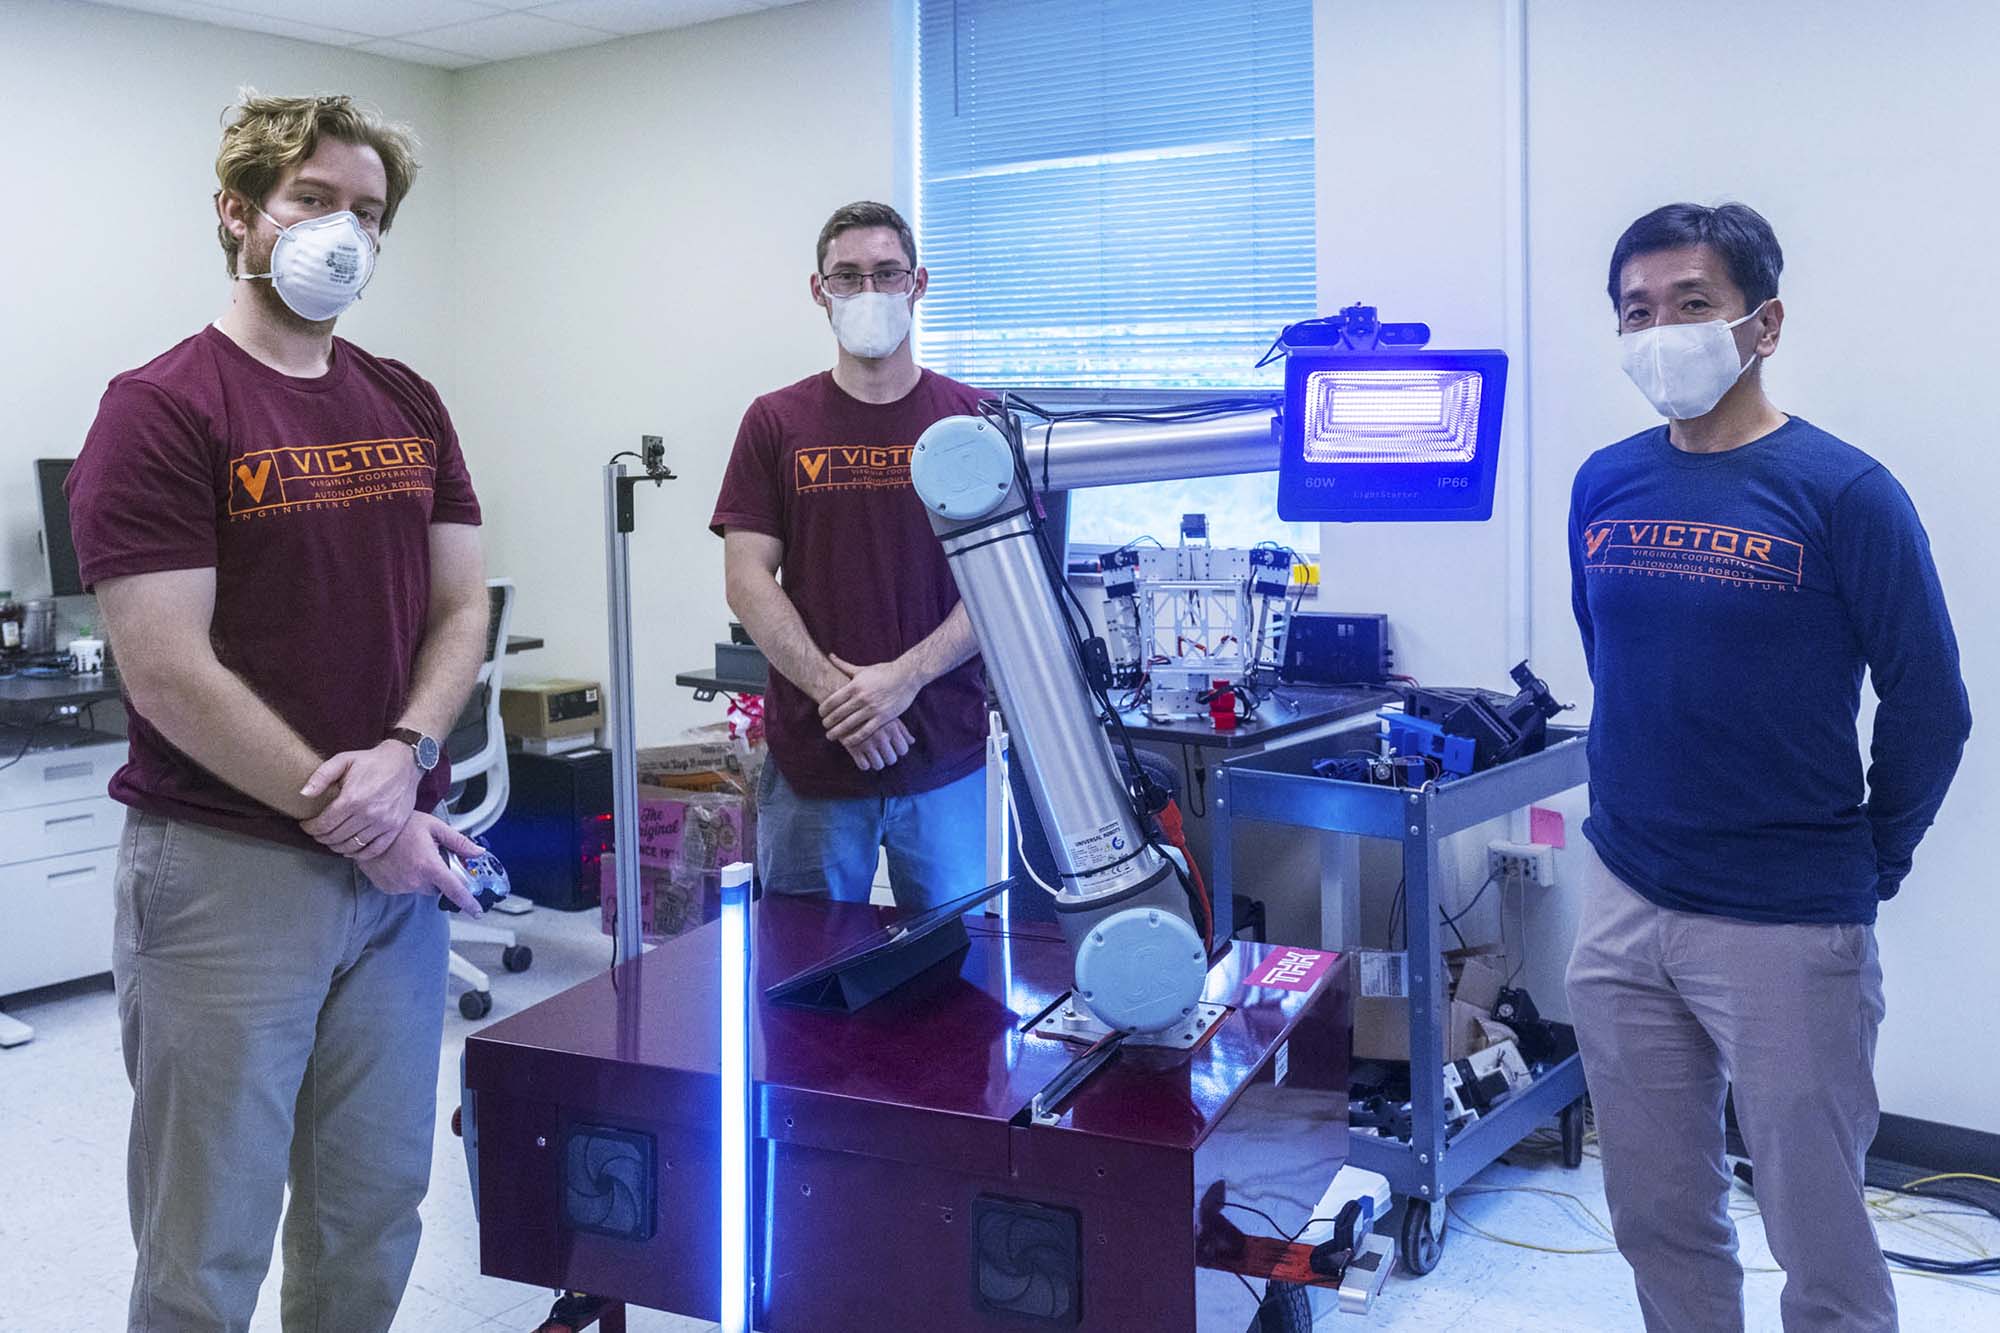 pencer Leamy and Dean Conte and professor Tomonari Furukawa stand next to their robot